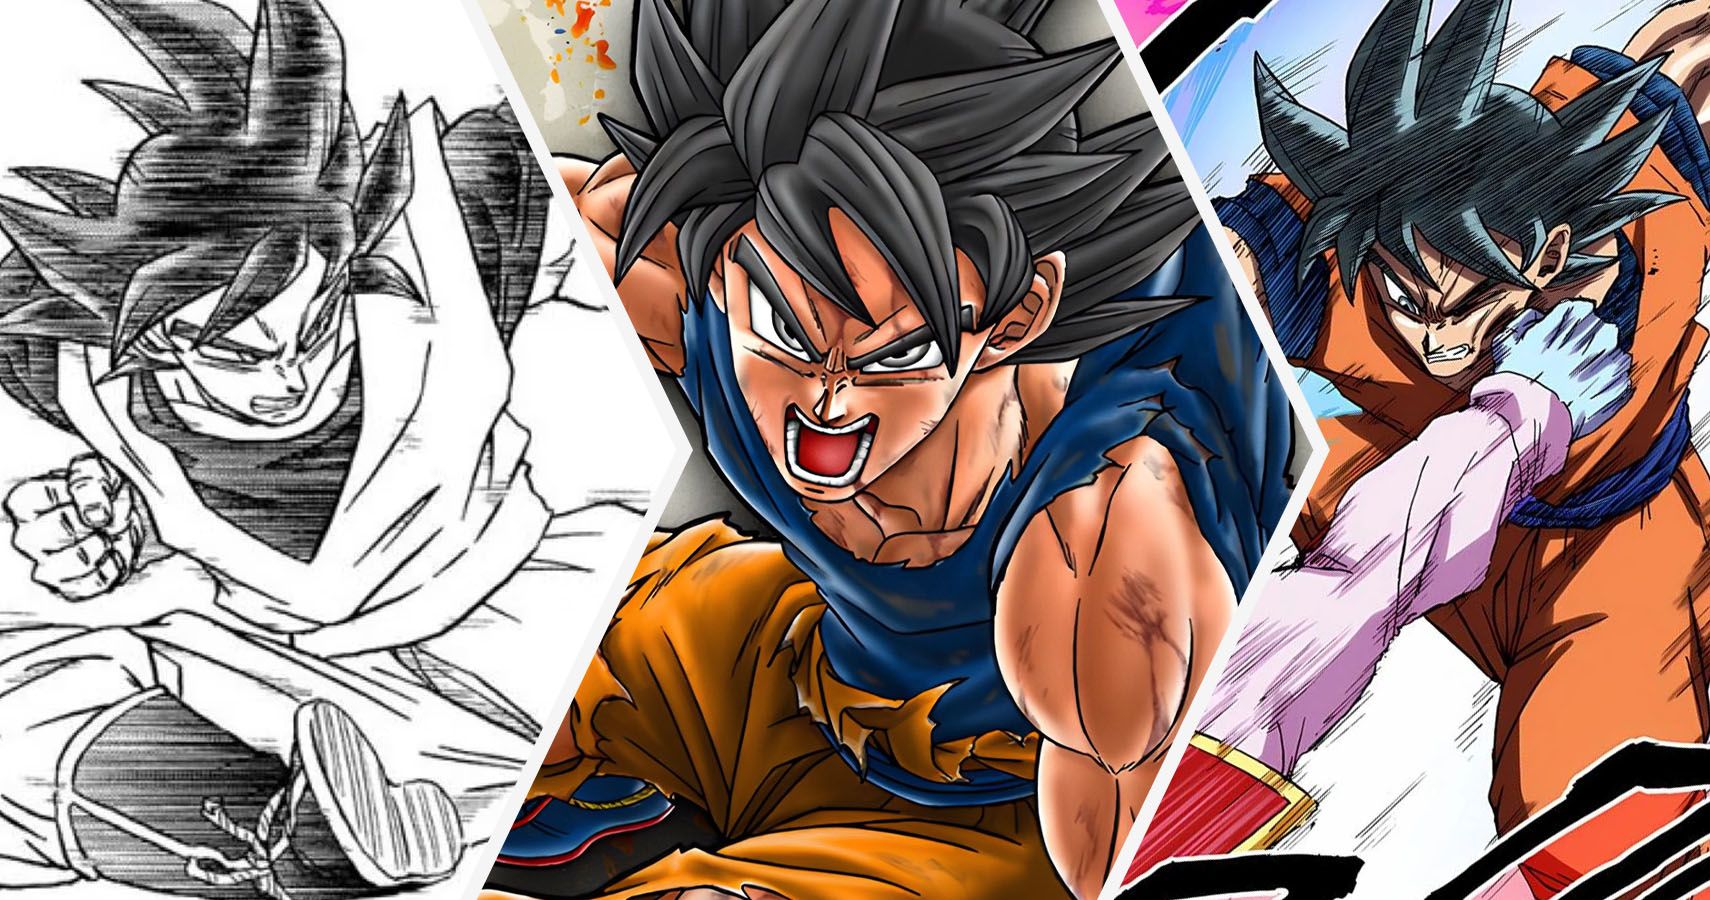 True Ultra Instinct Goku from the Dragon Ball Super manga